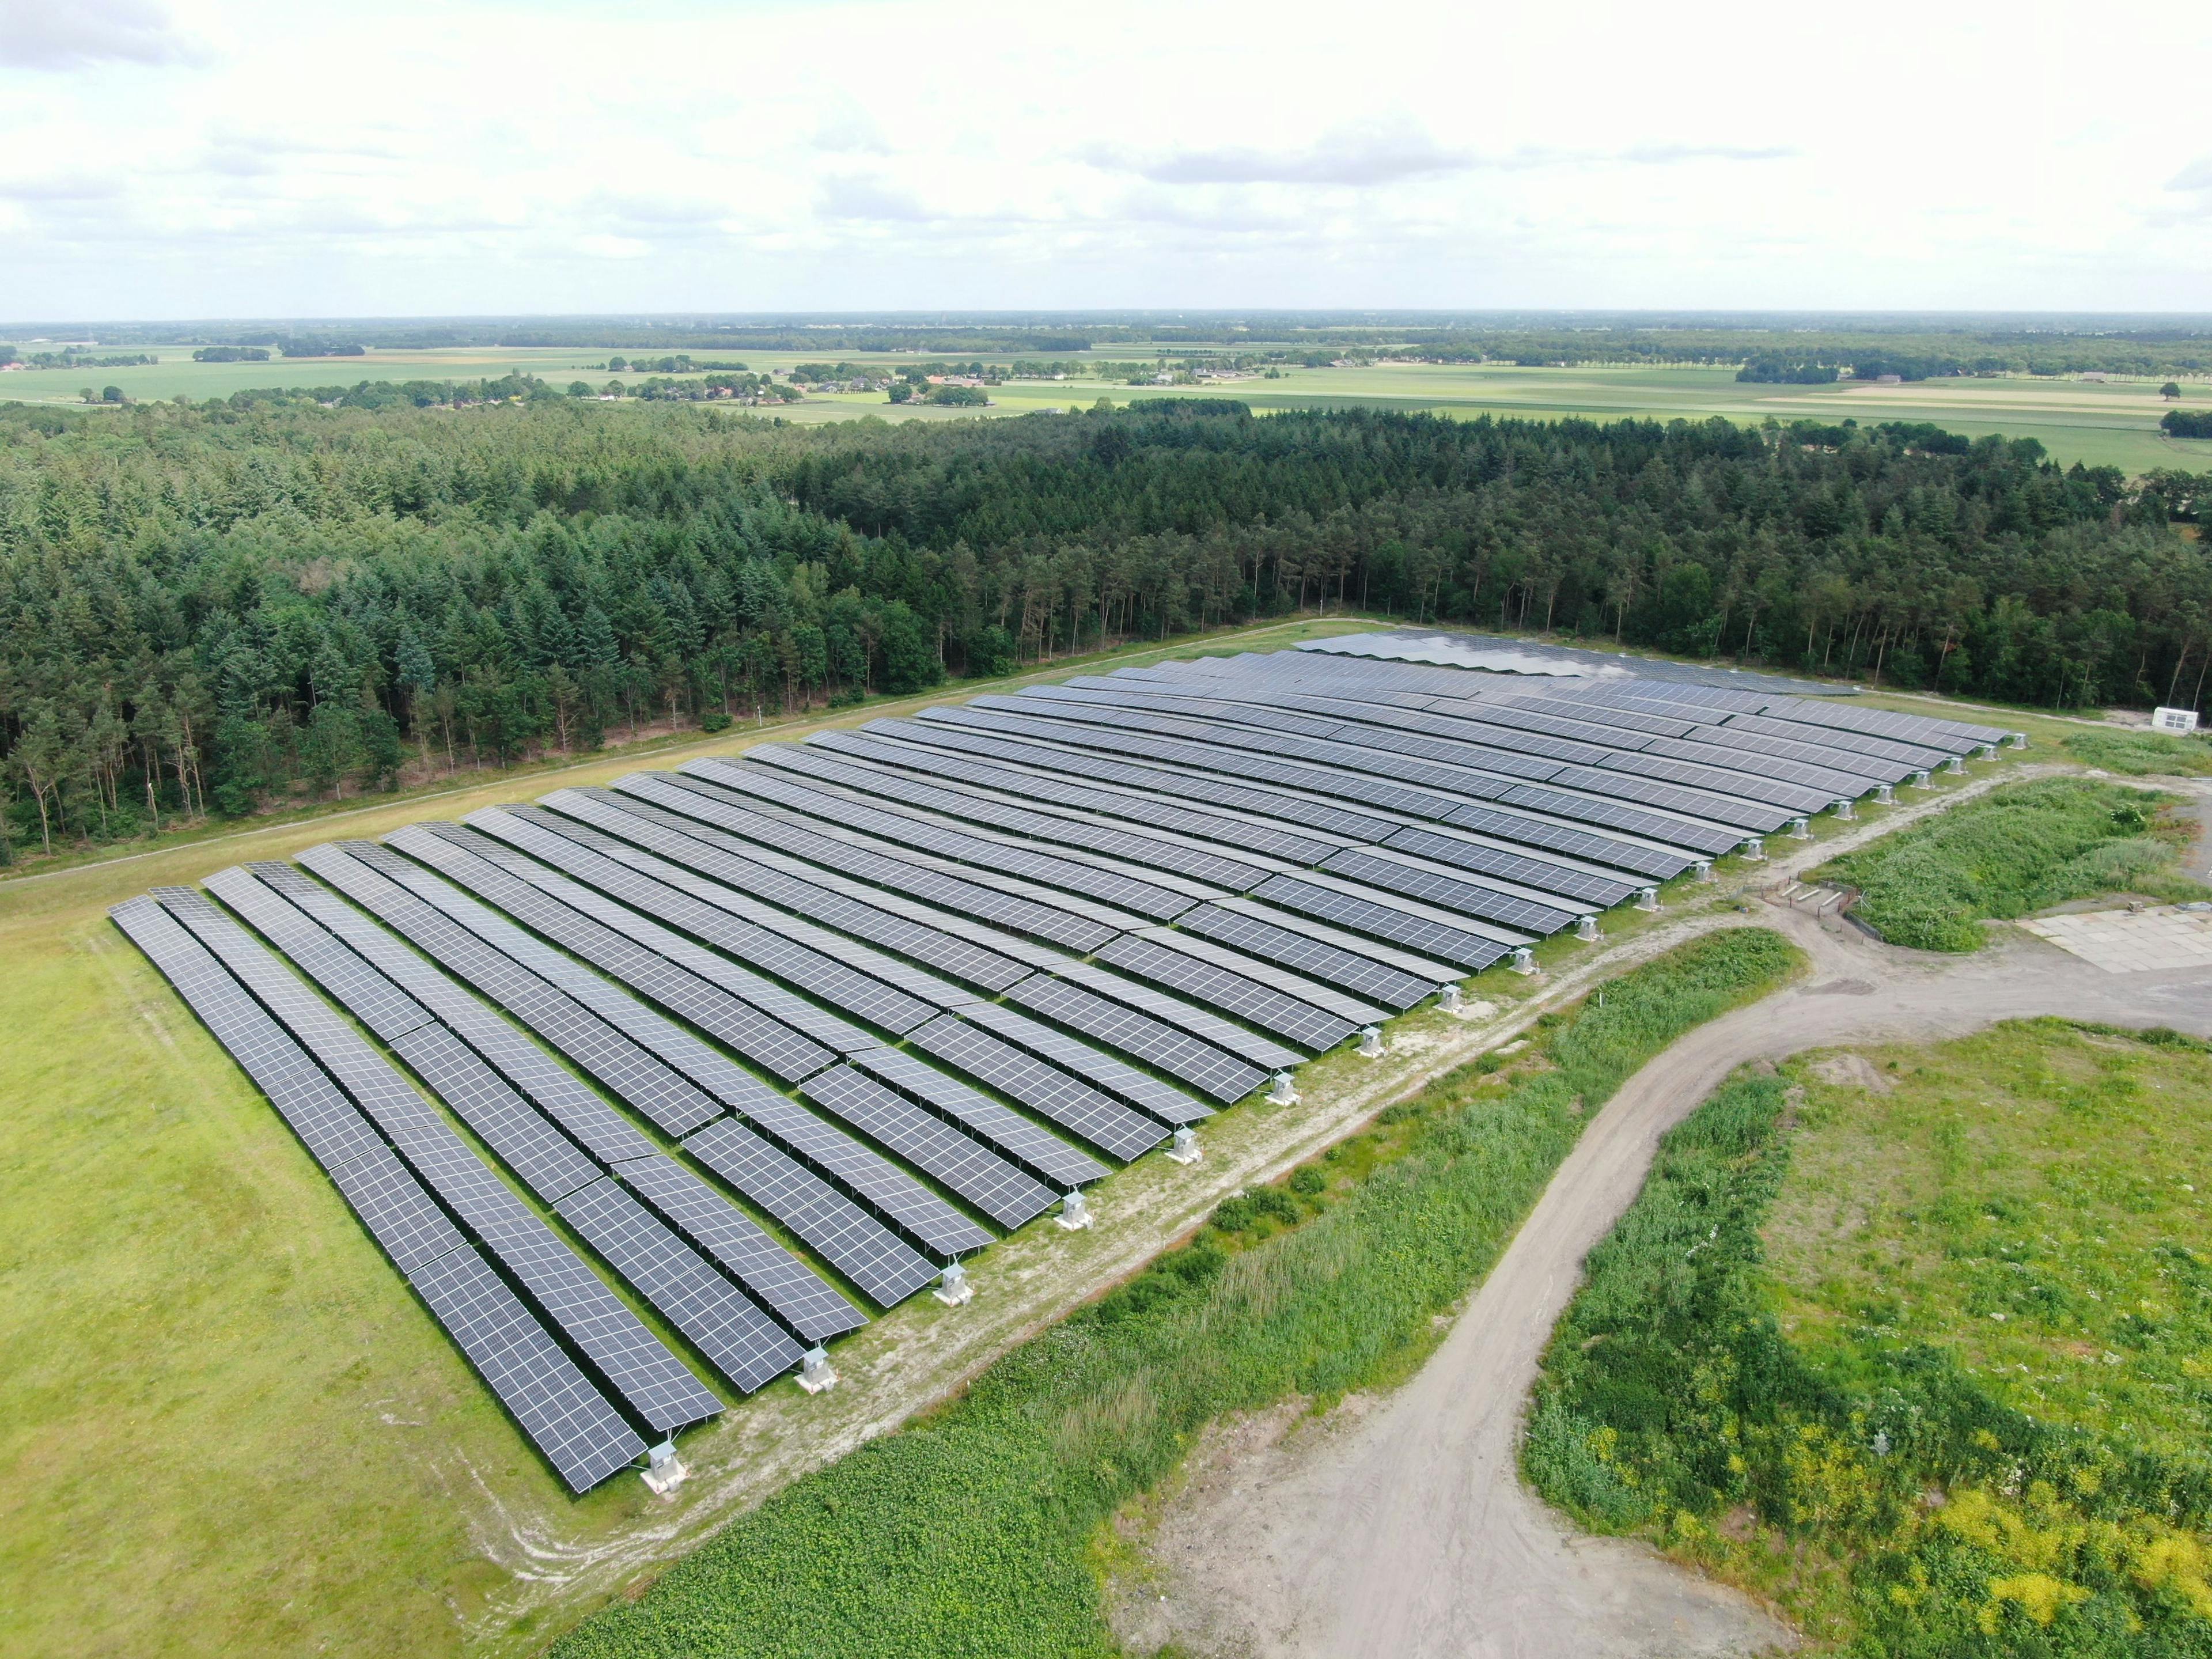 Bovenveld freefield project in the Netherlands, taken by drone